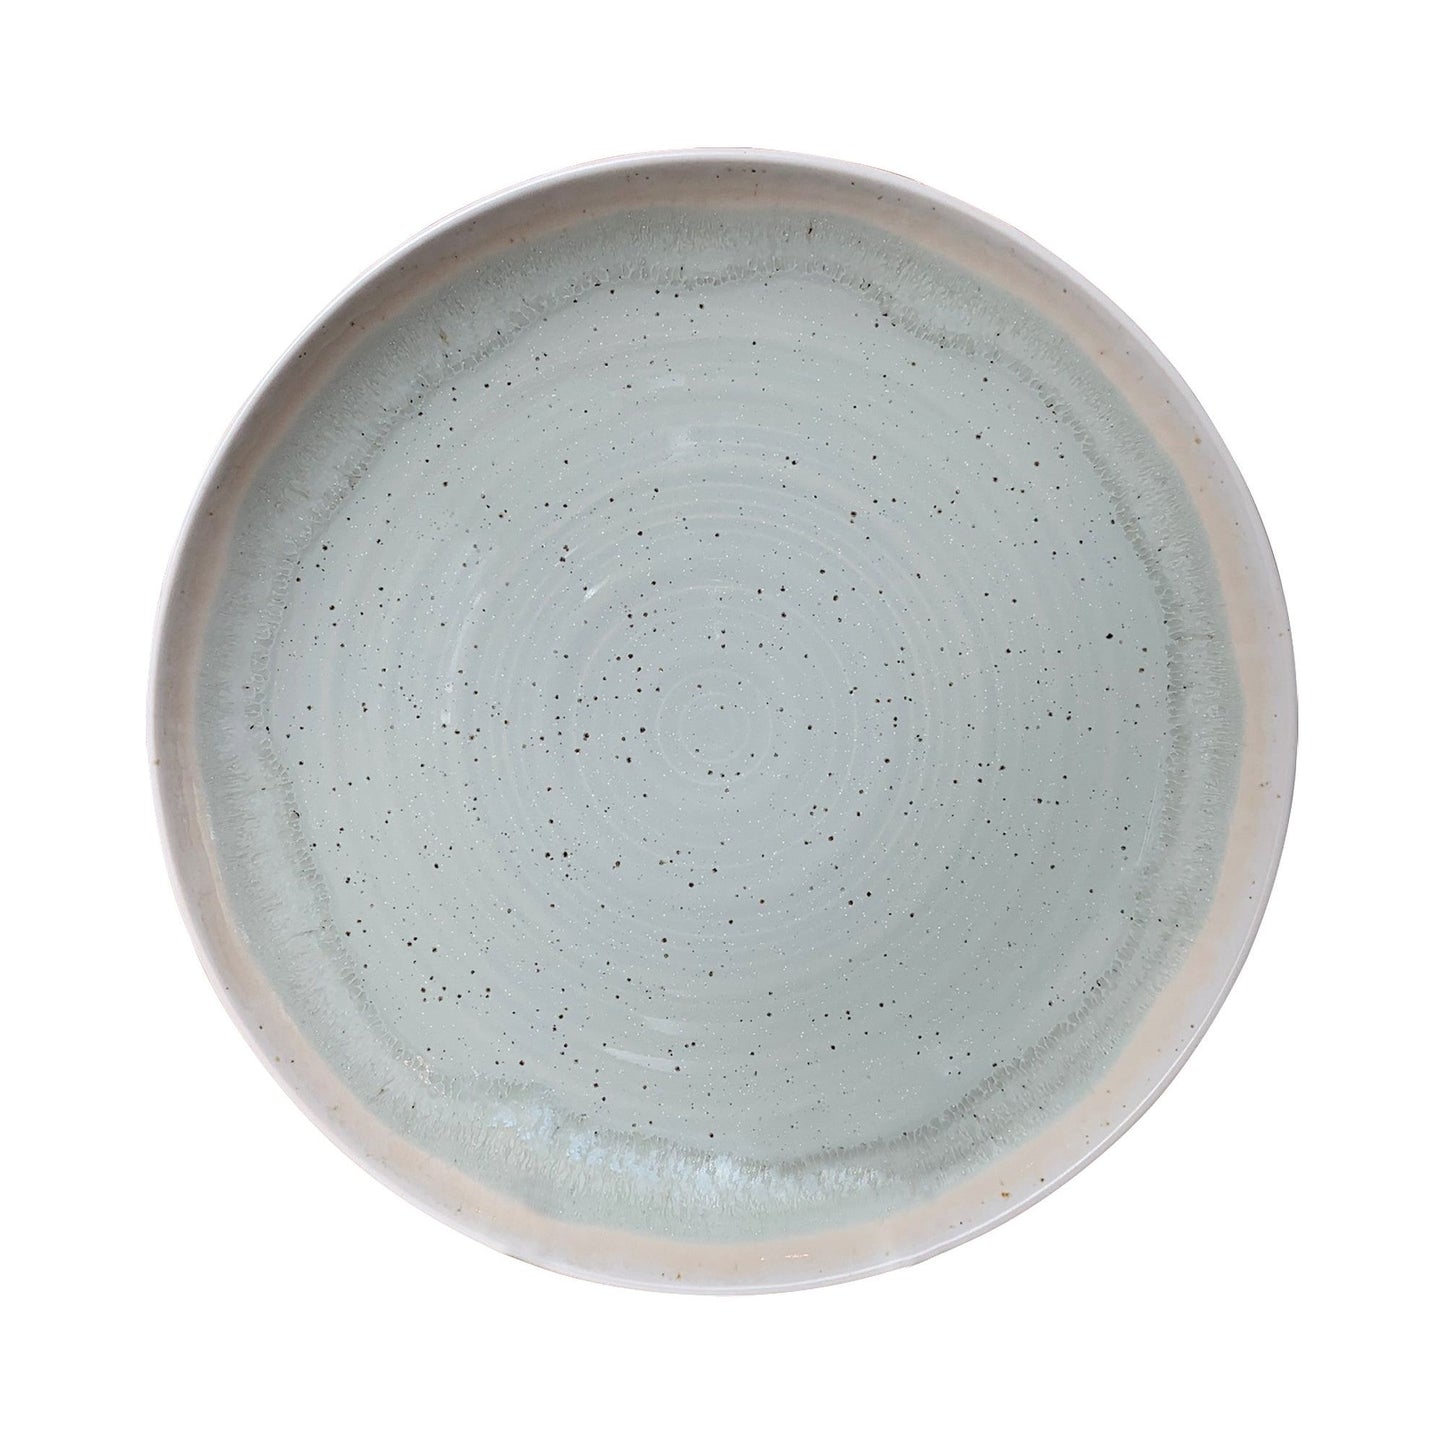 Pale Aqua Ceramic Dinnerware Set - Sixteen Piece